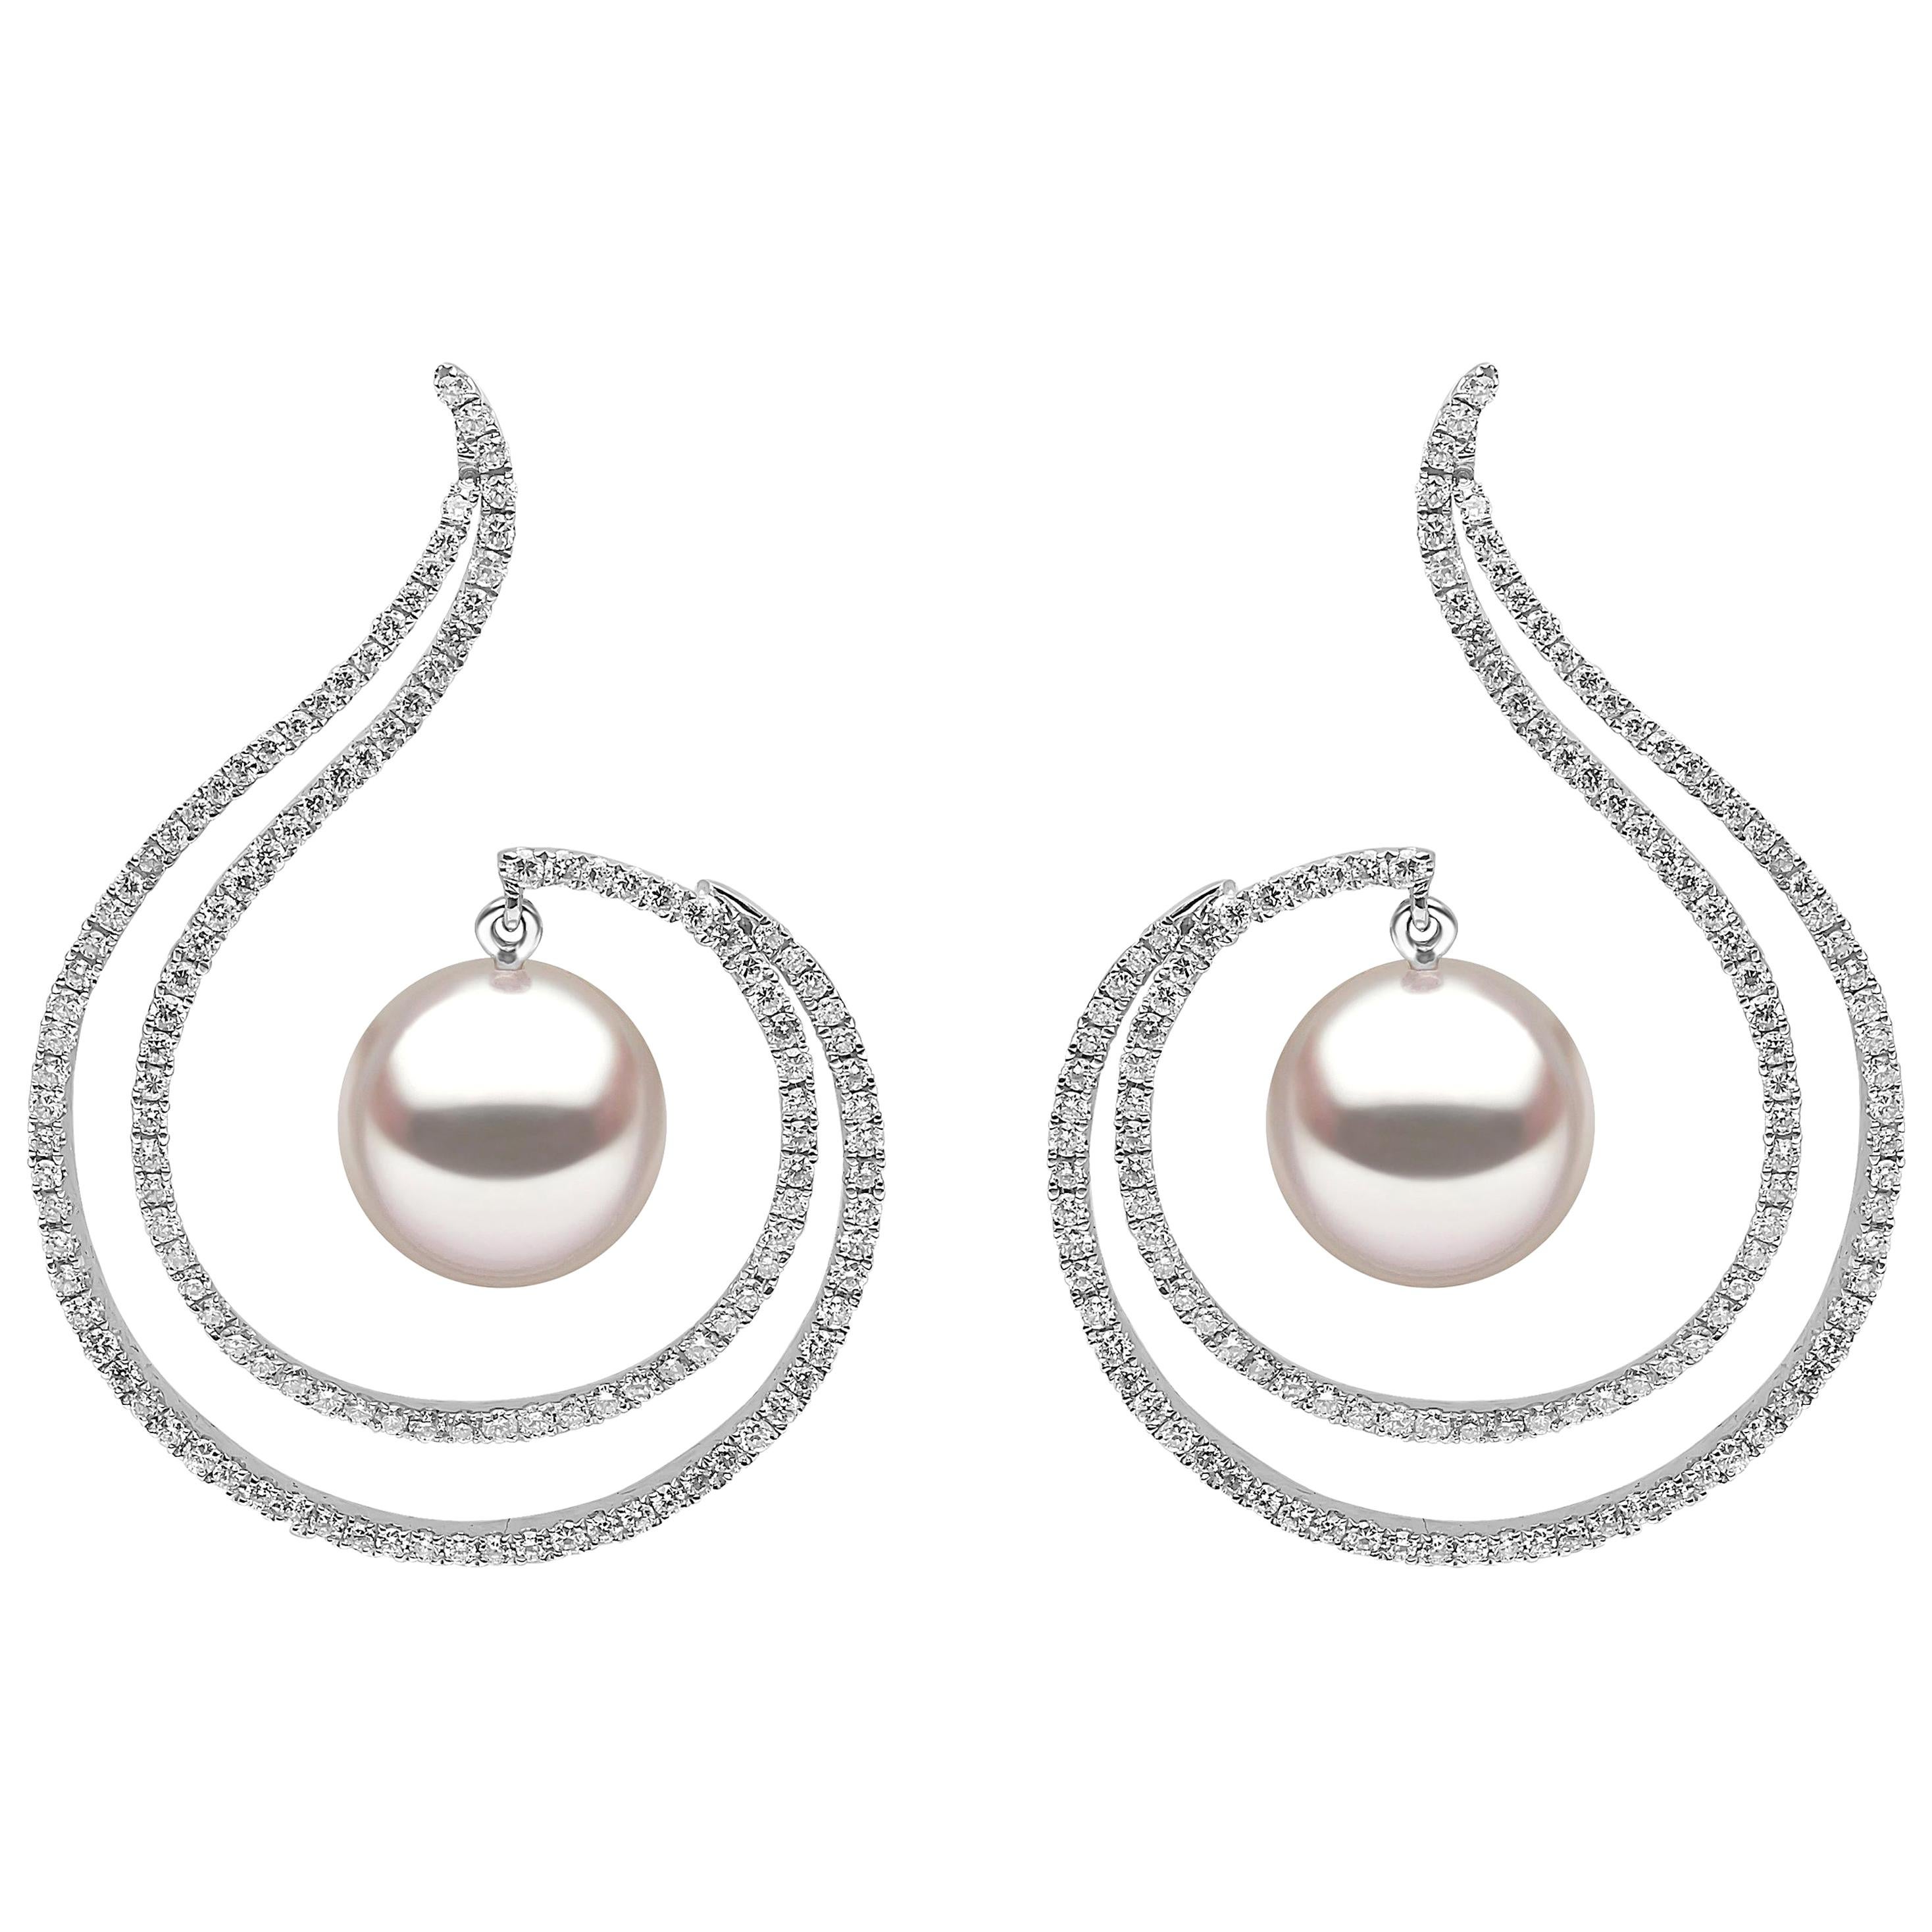 Yoko London South Sea Pearl and Diamond Earrings Set in 18 Karat White Gold